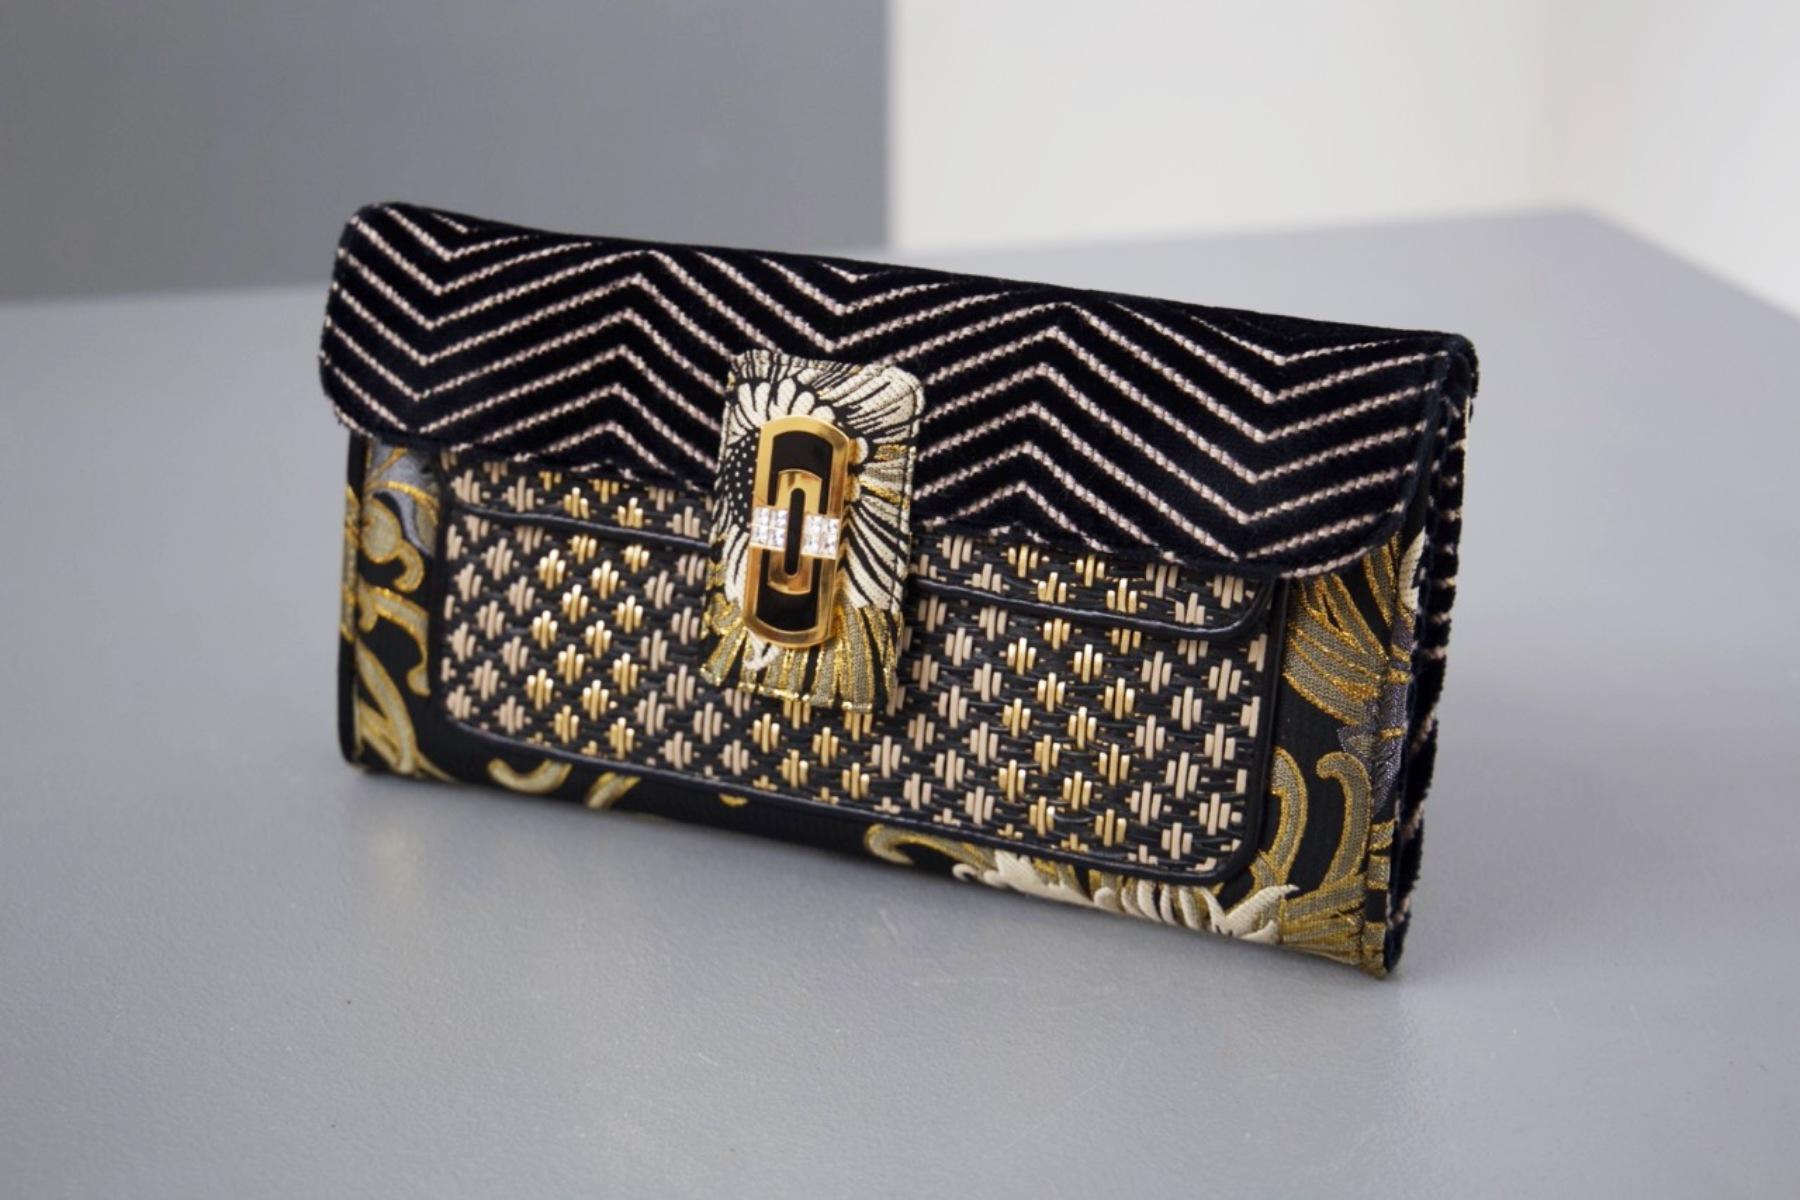 Bulgari Damen-Clutch Bag mit goldenen floralen Details 4